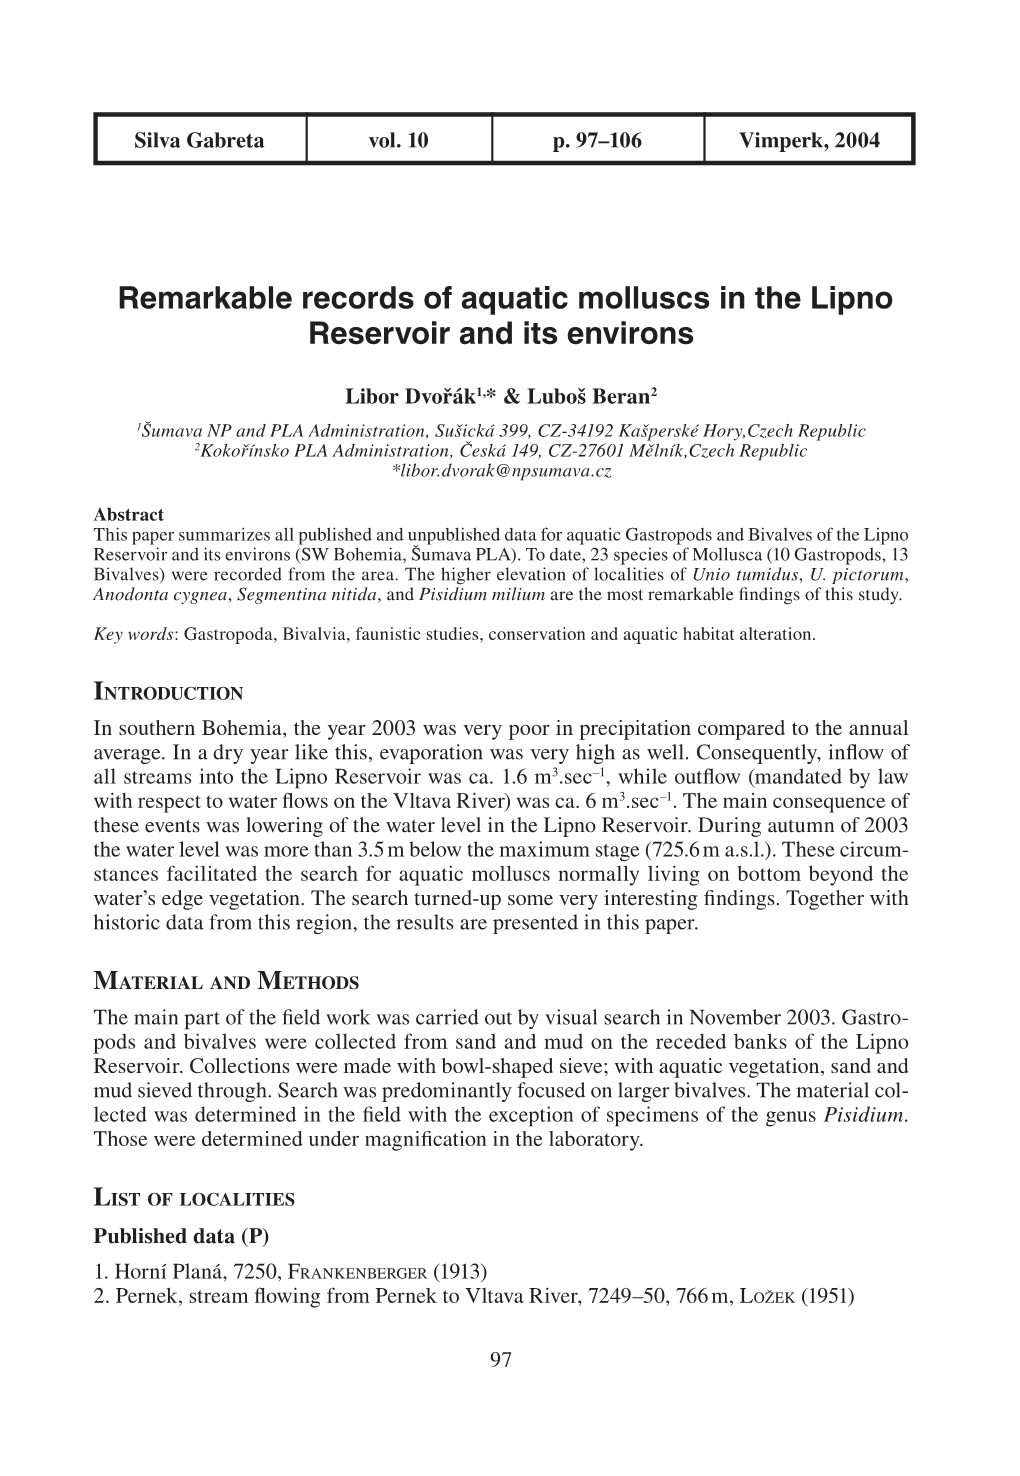 Remarkable Records of Aquatic Molluscs in the Lipno Reservoir and Its Environs